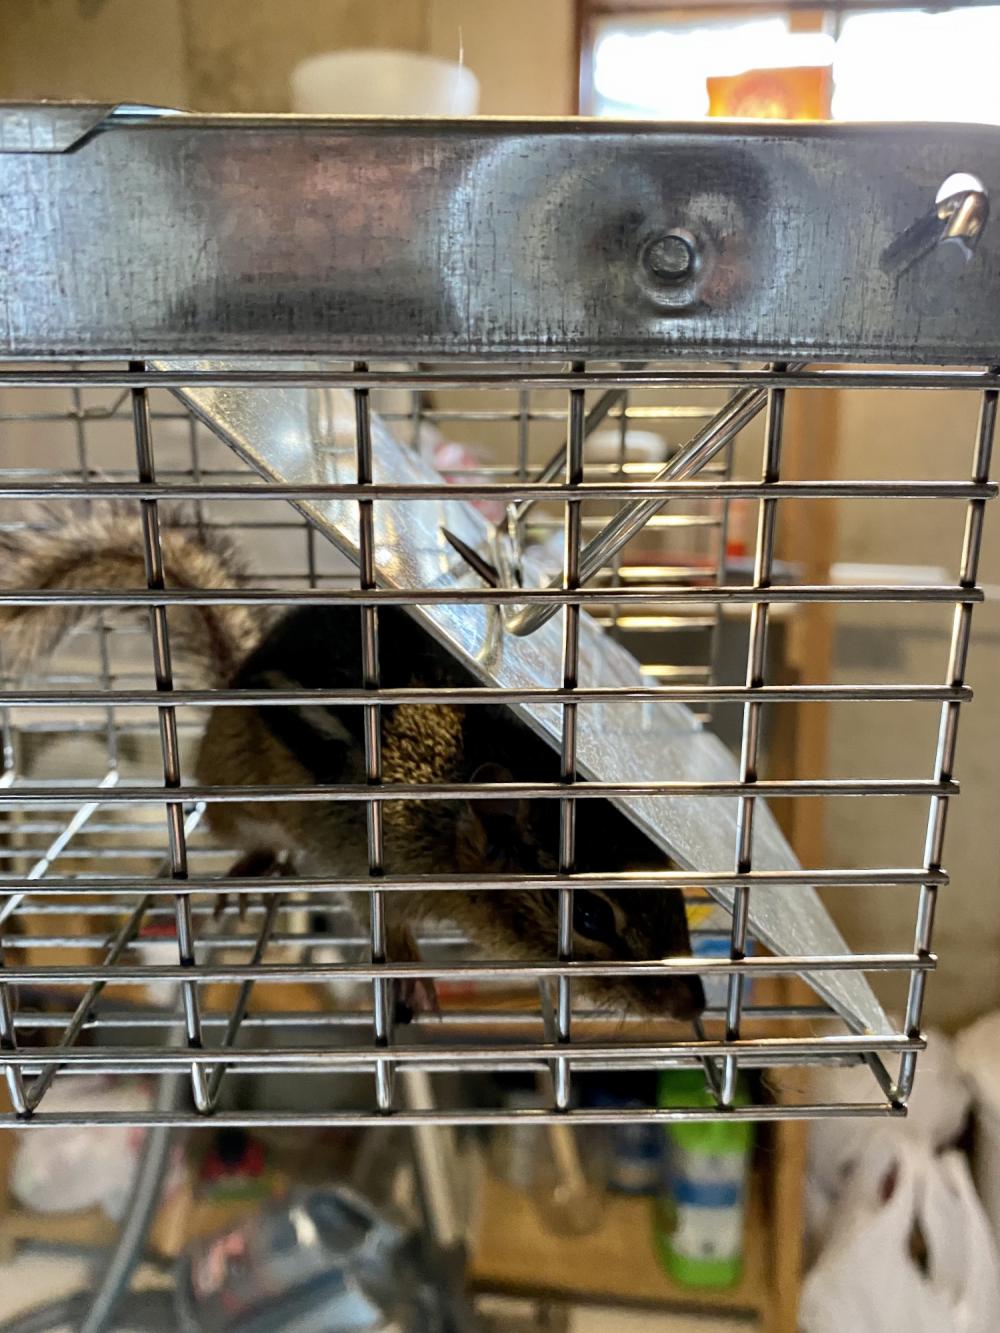 Chipmunk caught in le trap